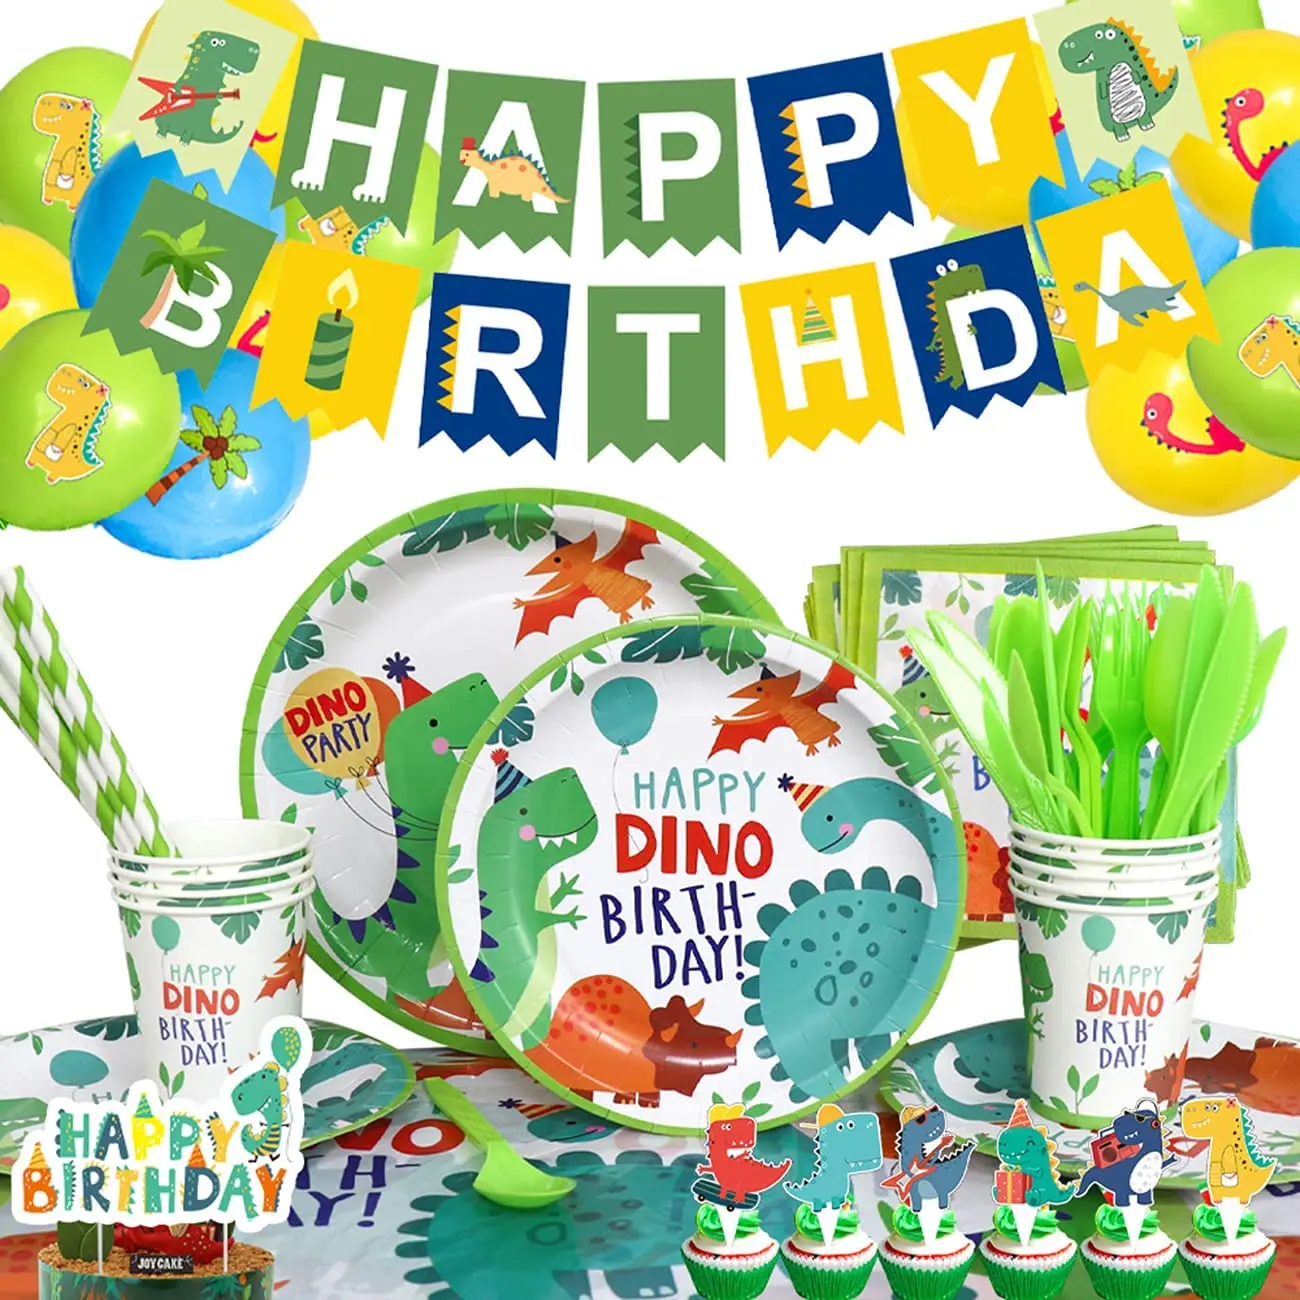 

Dinosaur Birthday Party Supplies Tablecloth Happy Birthday Paper Garland Banner Cake Topper Balloon Hanging Swirl Dino Decor